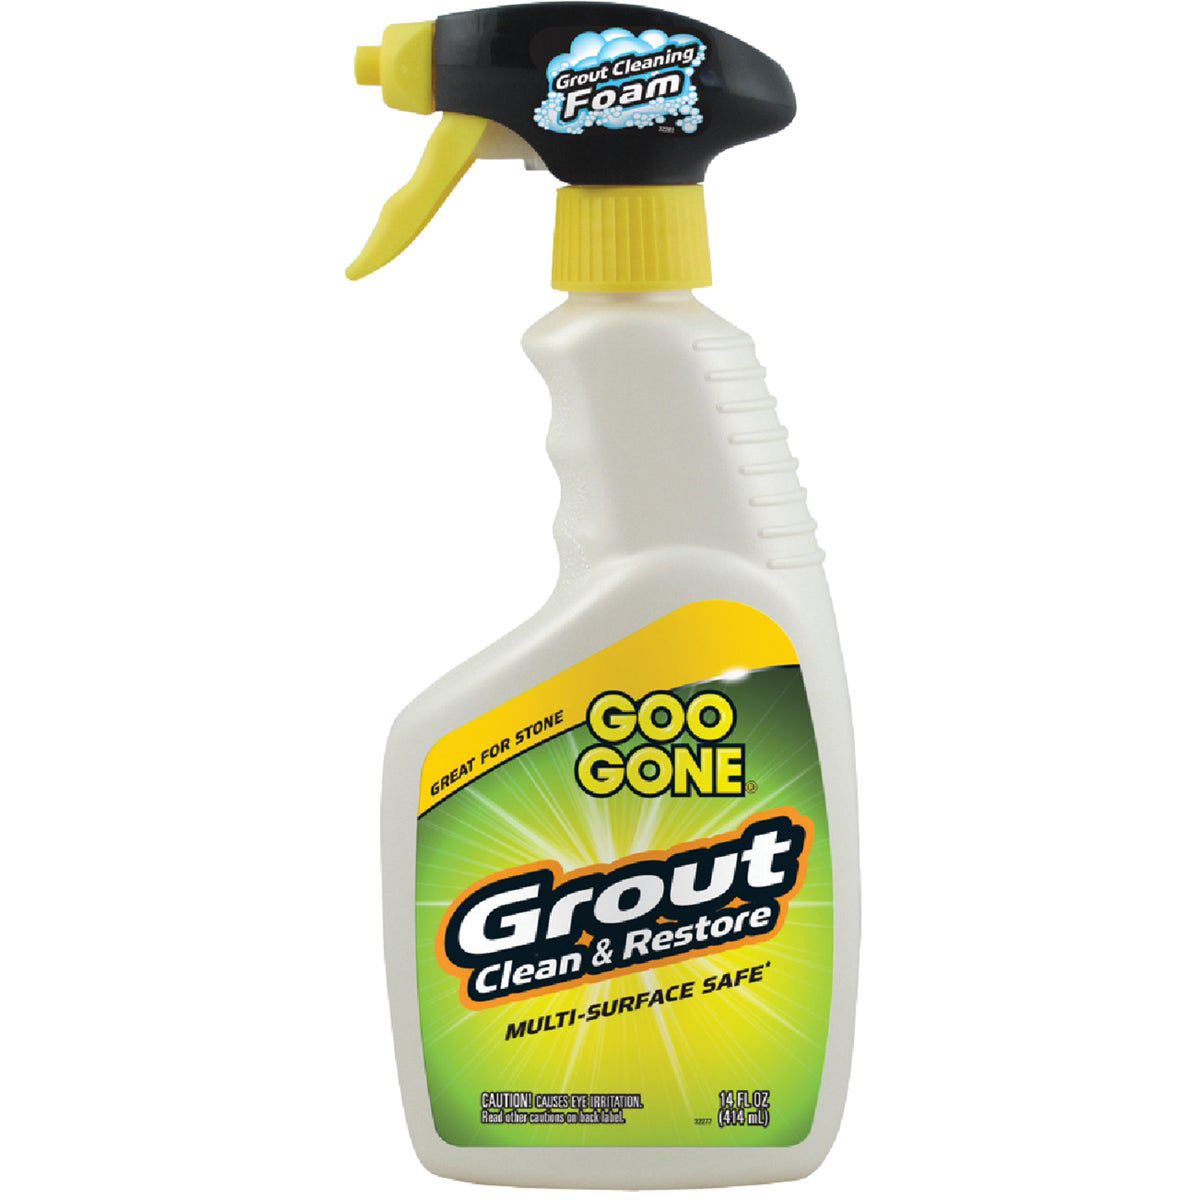 Goo Gone 14 Oz. Grout Clean & Restore Multi Surface Safe